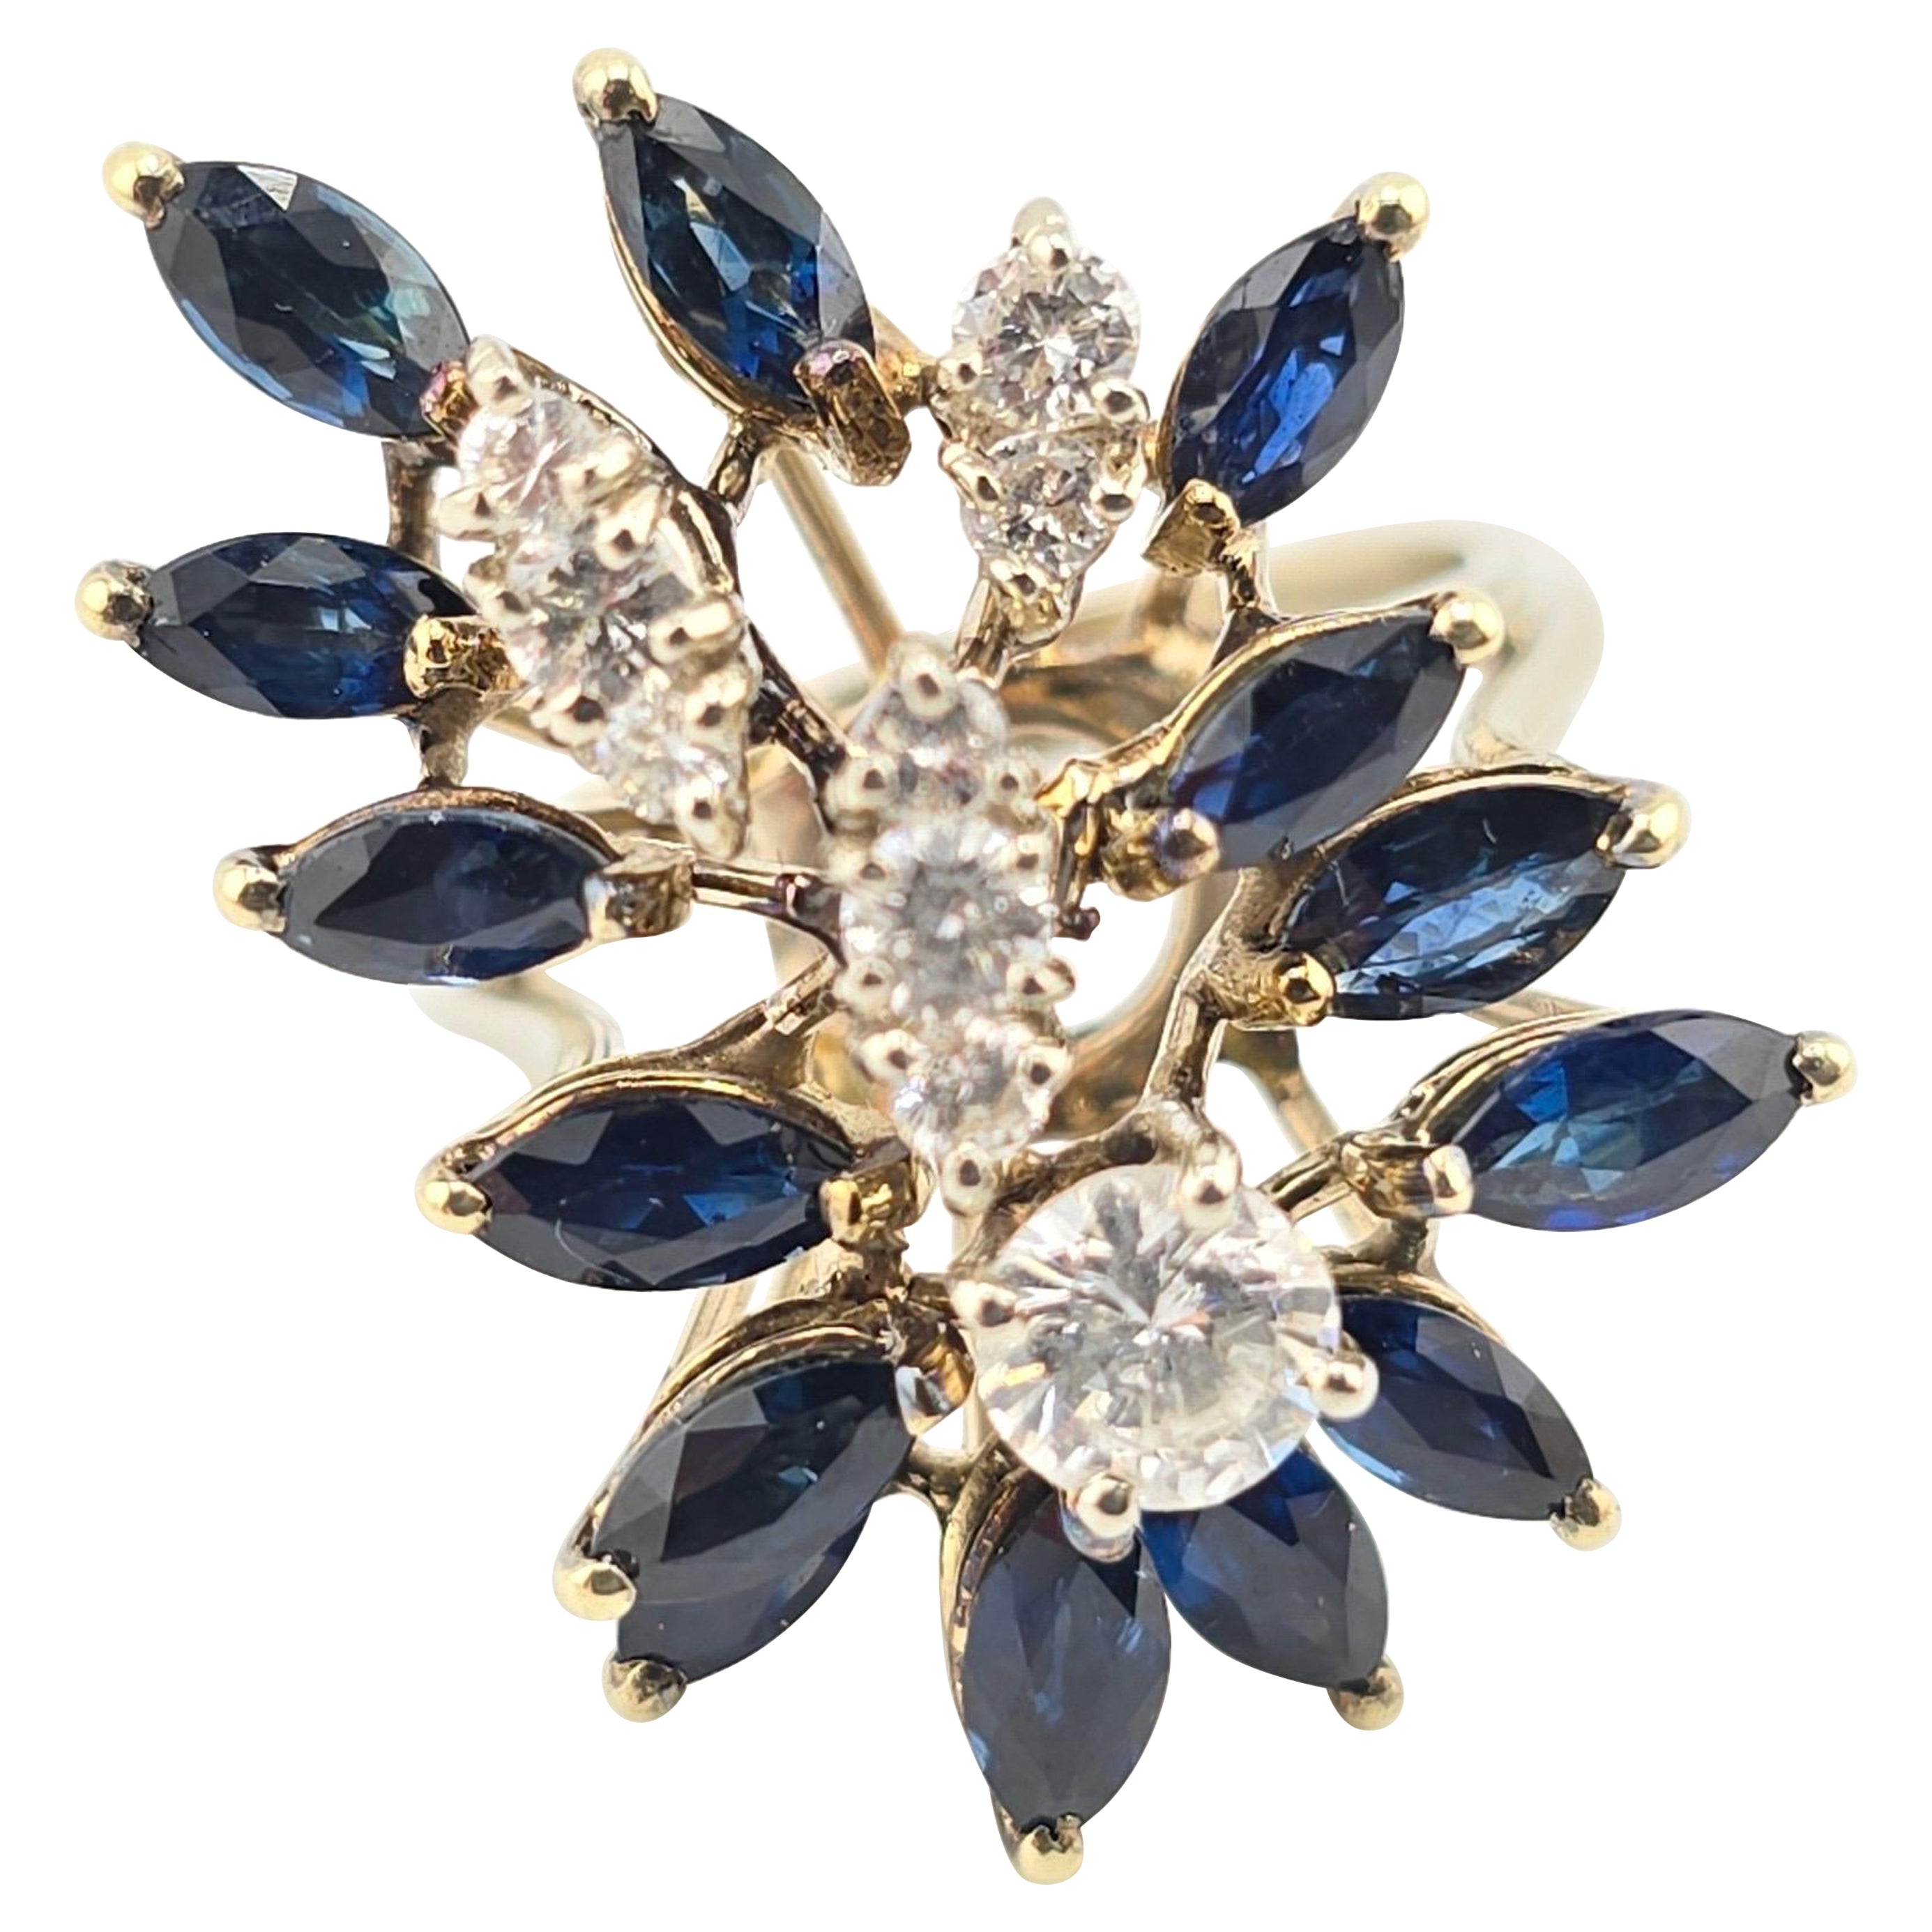 Marvelous Diamond & Sapphire Cluster Ring Gorgeous Stones